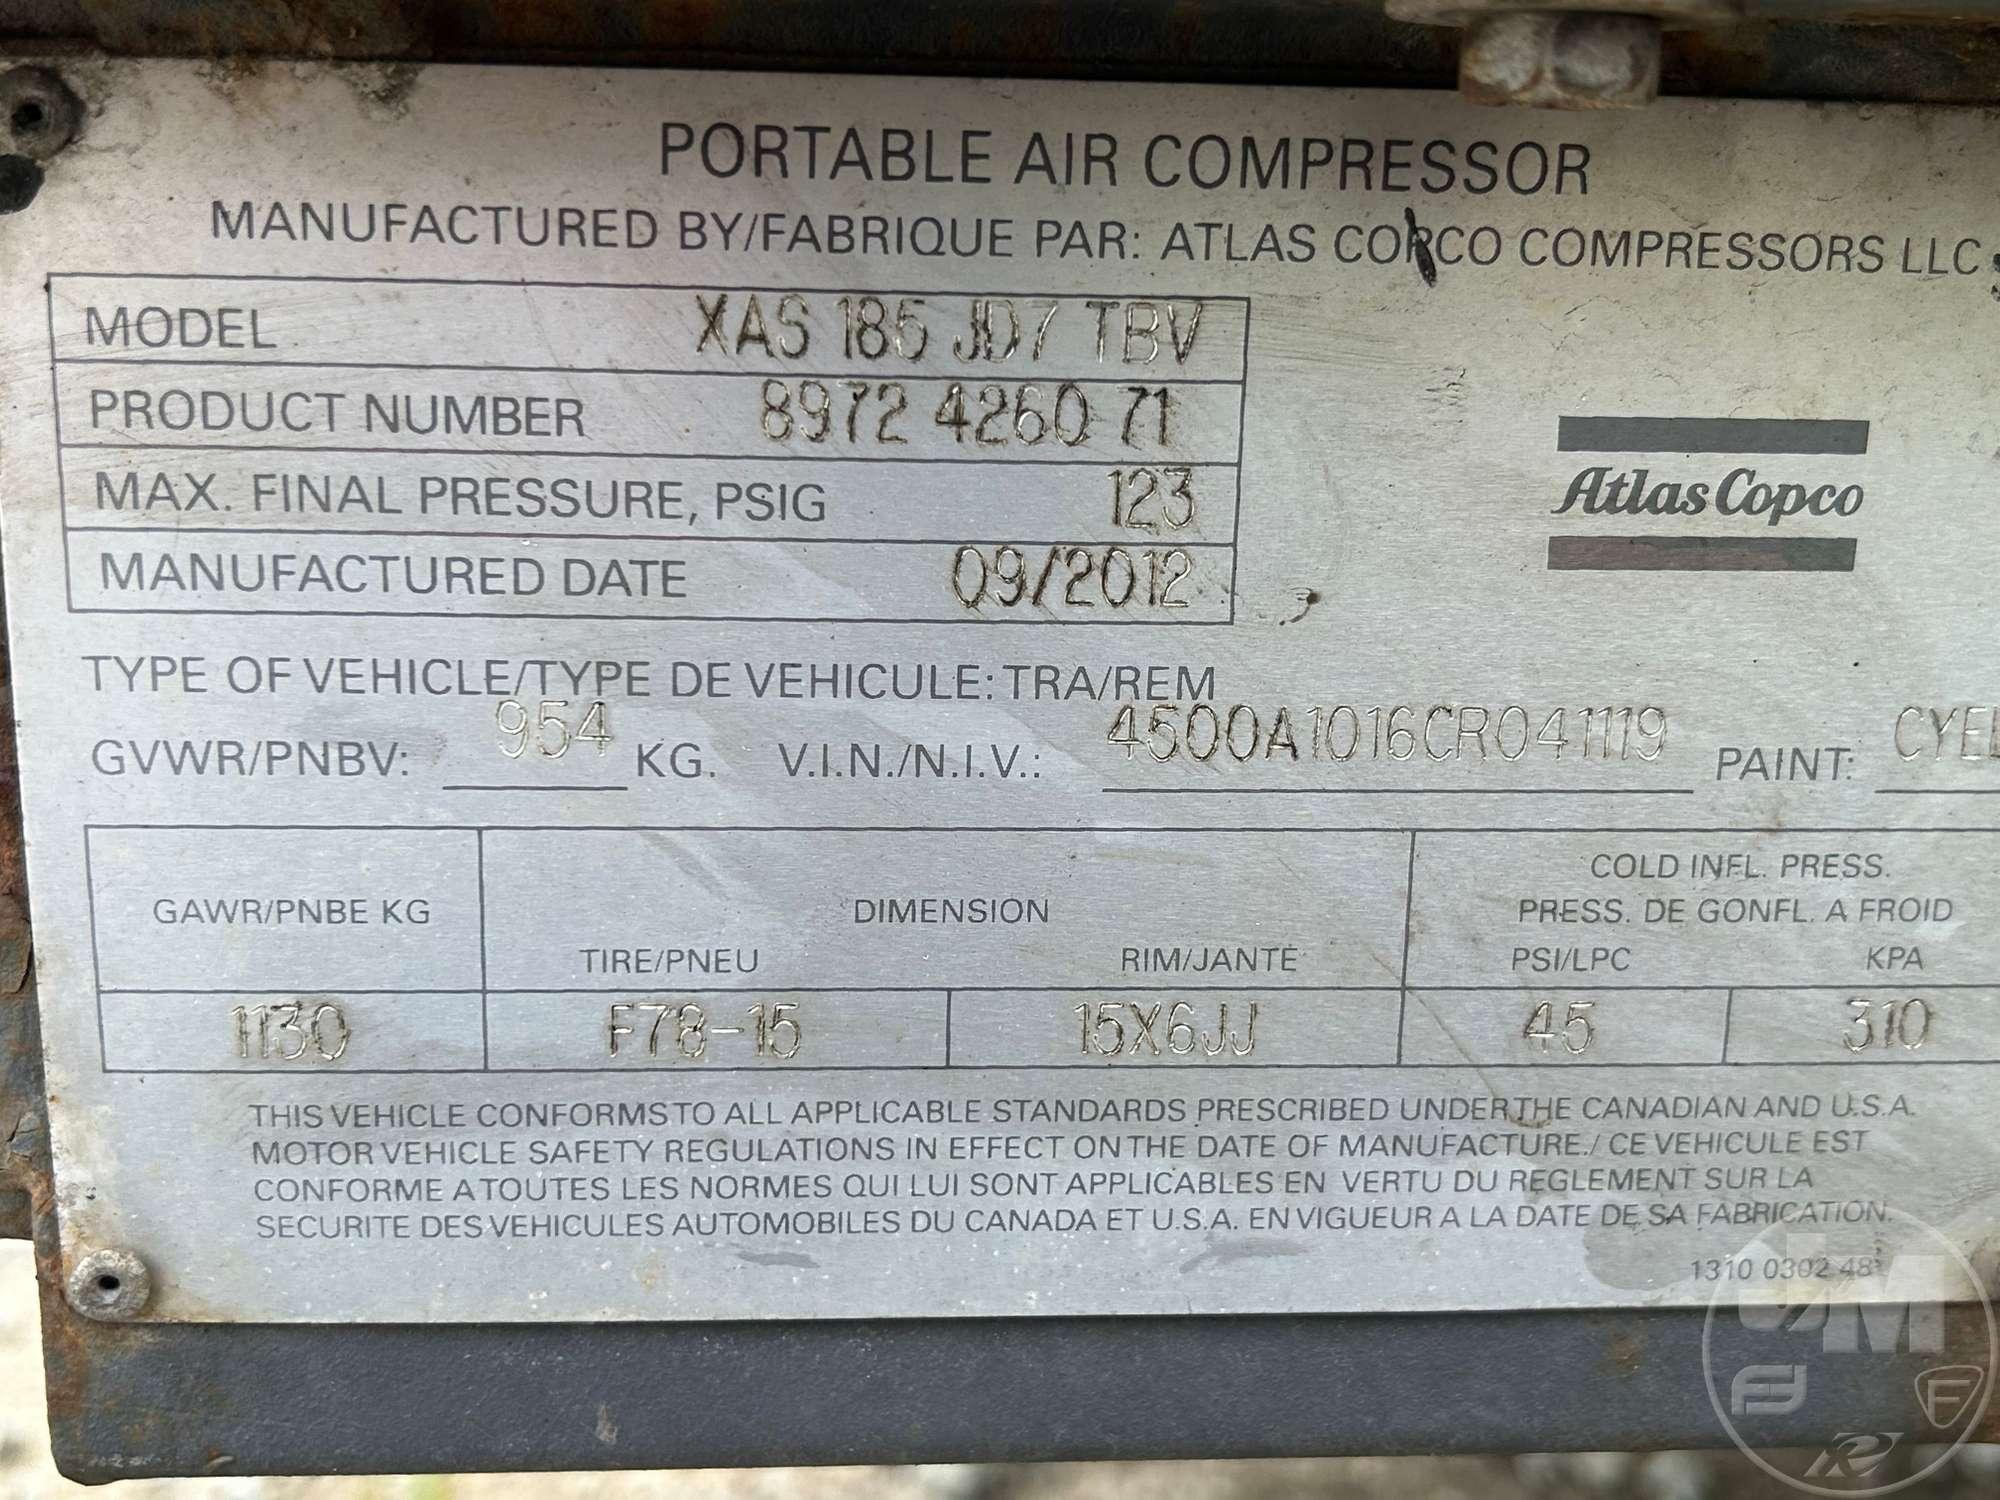 2012 ATLAS COPCO XAS185JD7TBV PORTABLE AIR COMPRESSOR SN: 4500A1016CRO4119